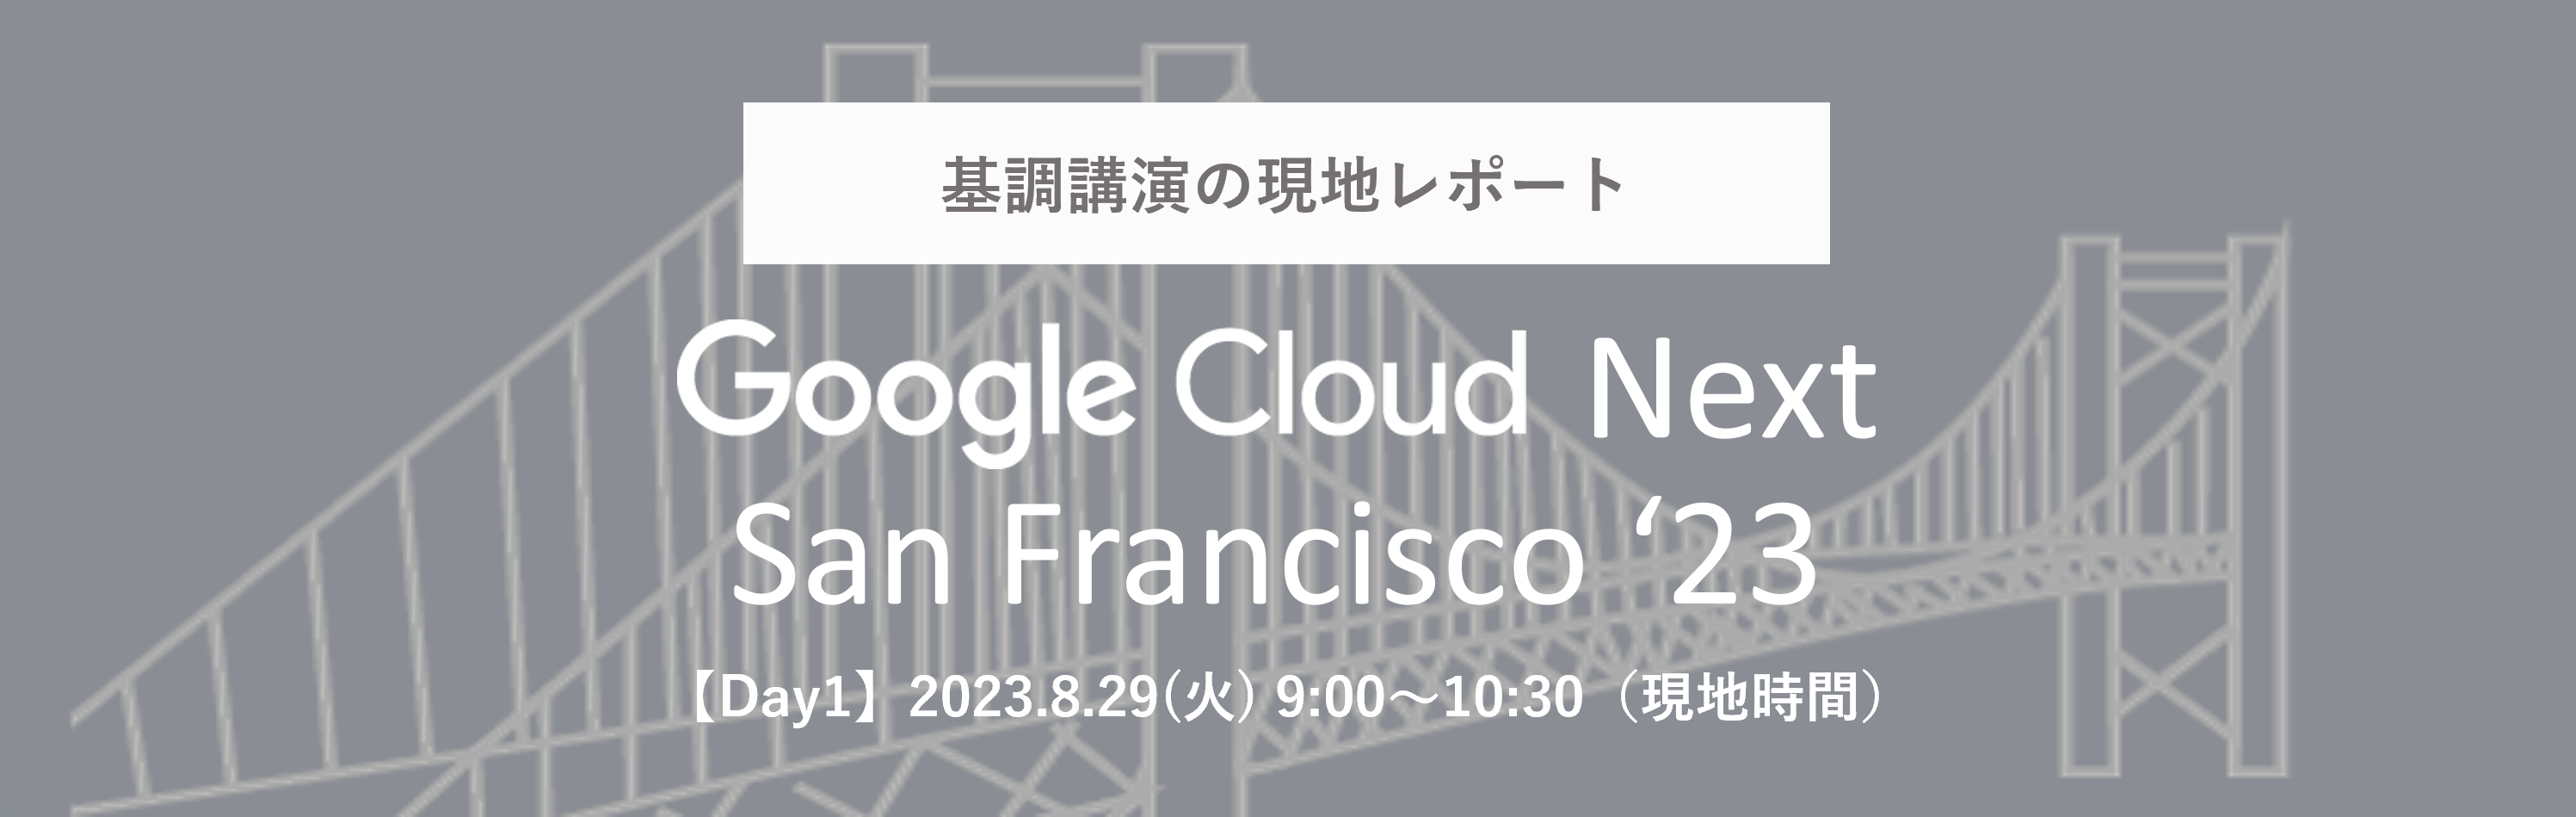 【Google Cloud Next San Francisco ’23 現地レポート】Day1 基調講演